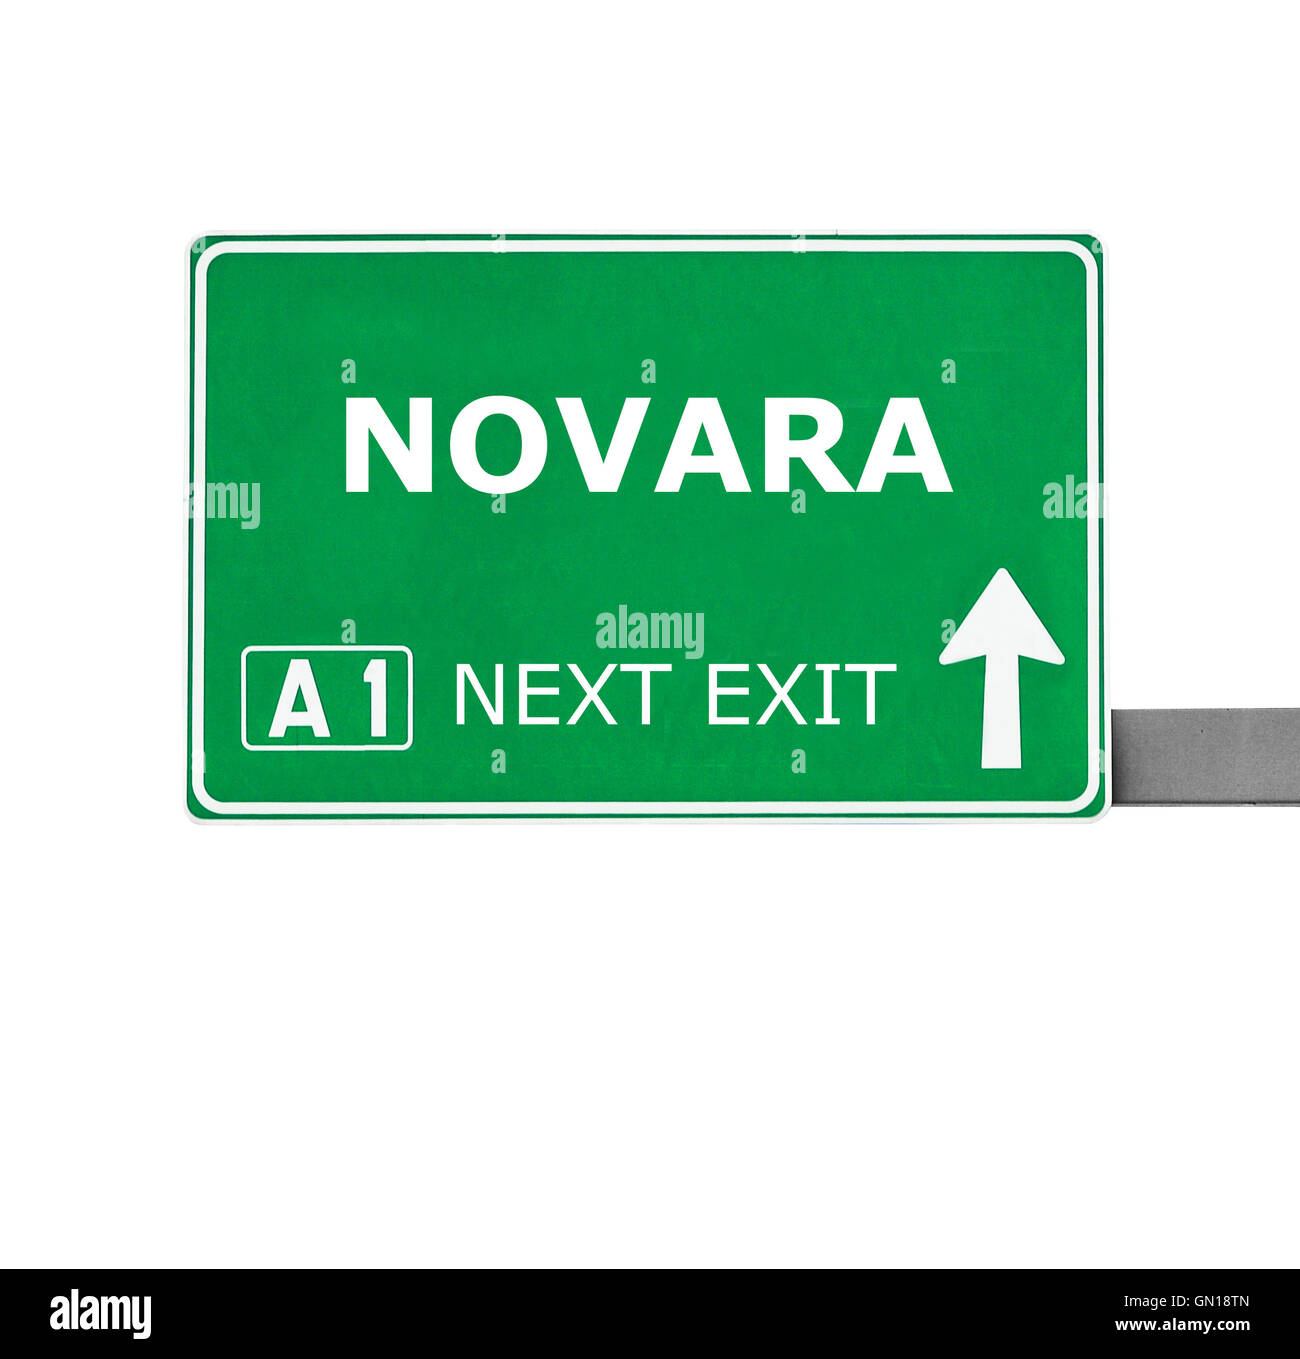 NOVARA road sign isolated on white Stock Photo